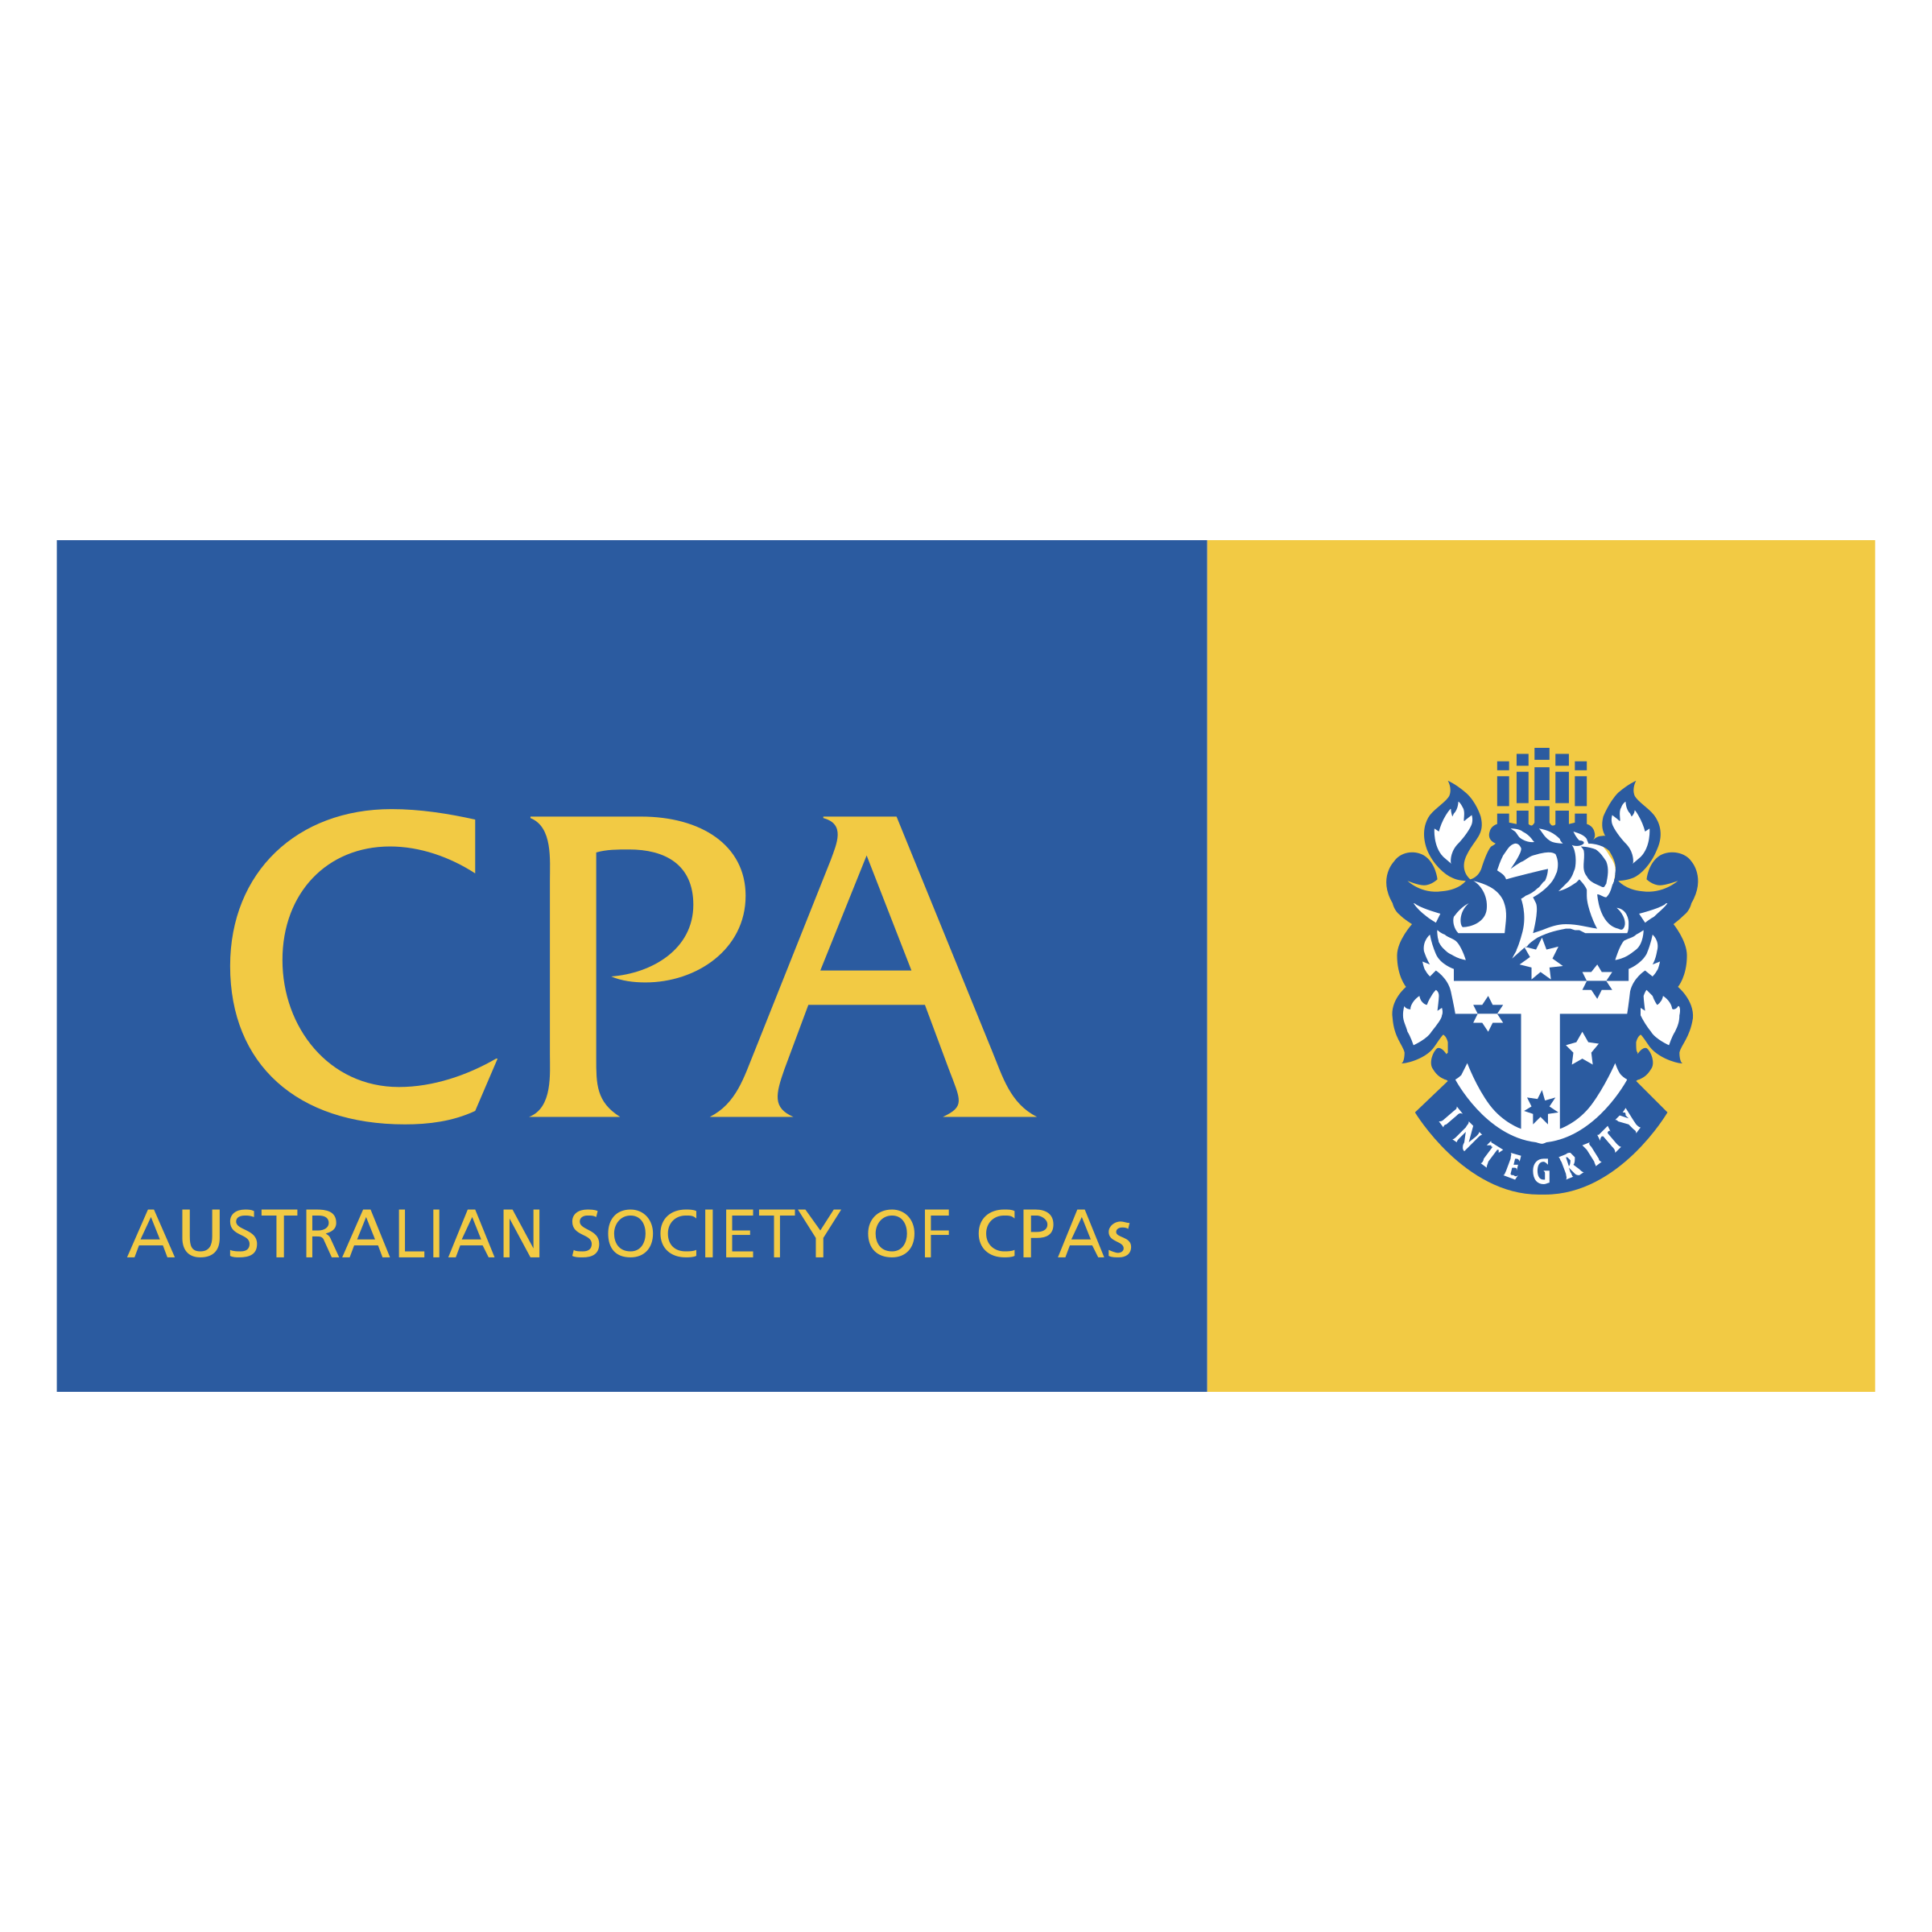 CPA Logo - CPA Logo PNG Transparent & SVG Vector - Freebie Supply